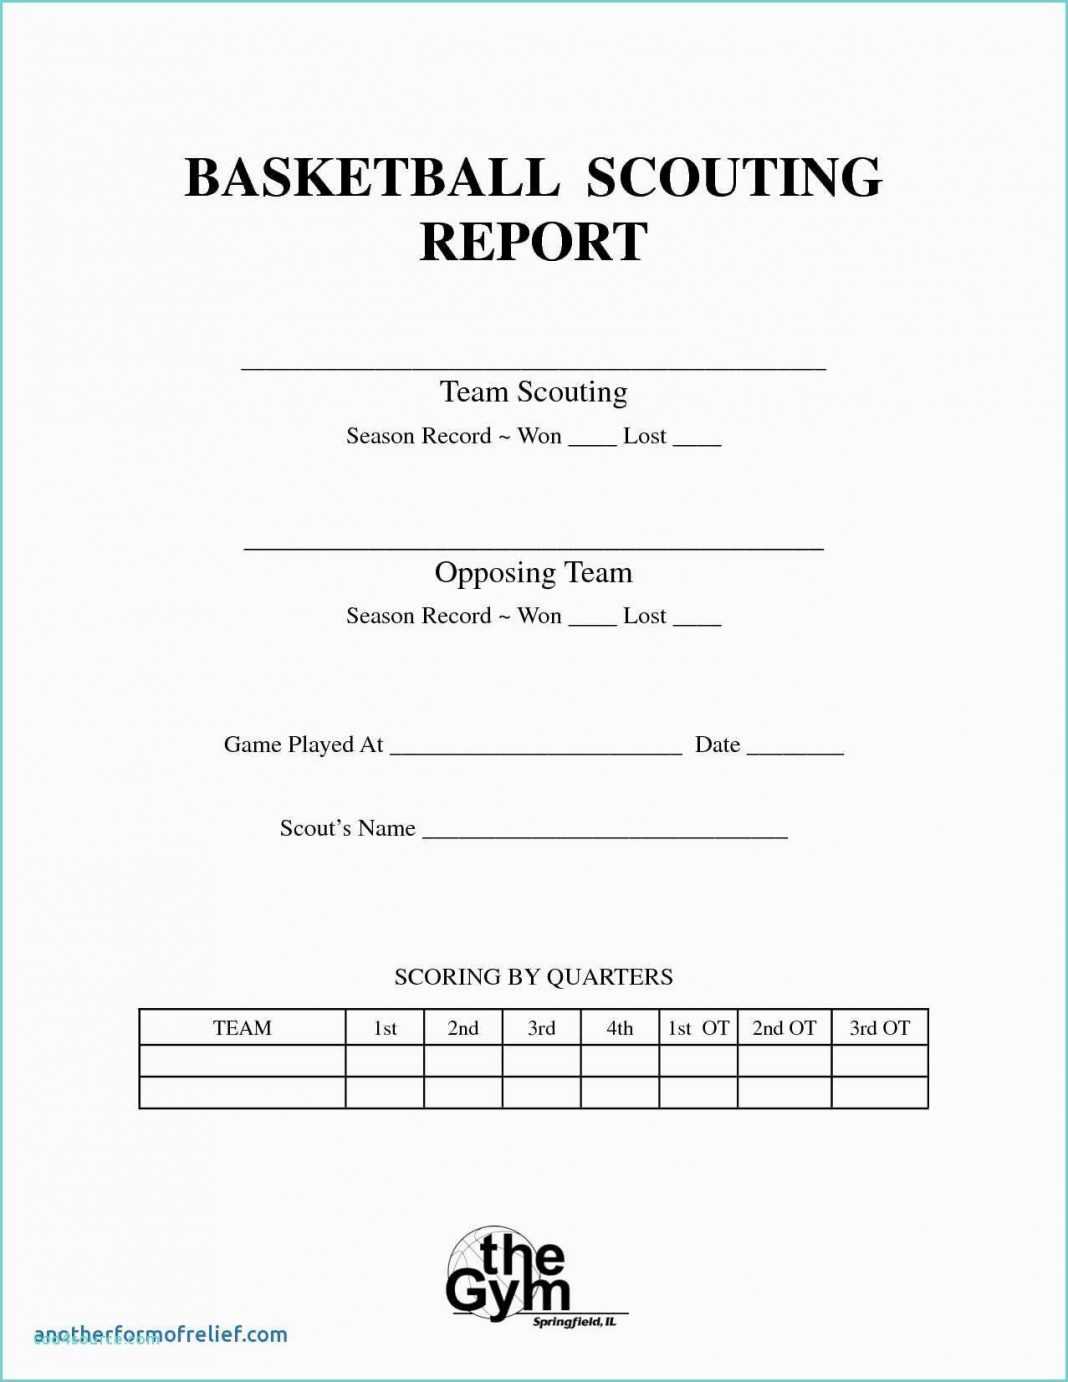 Report Examples Gamechart21 College Basketball Scouting In Basketball Scouting Report Template